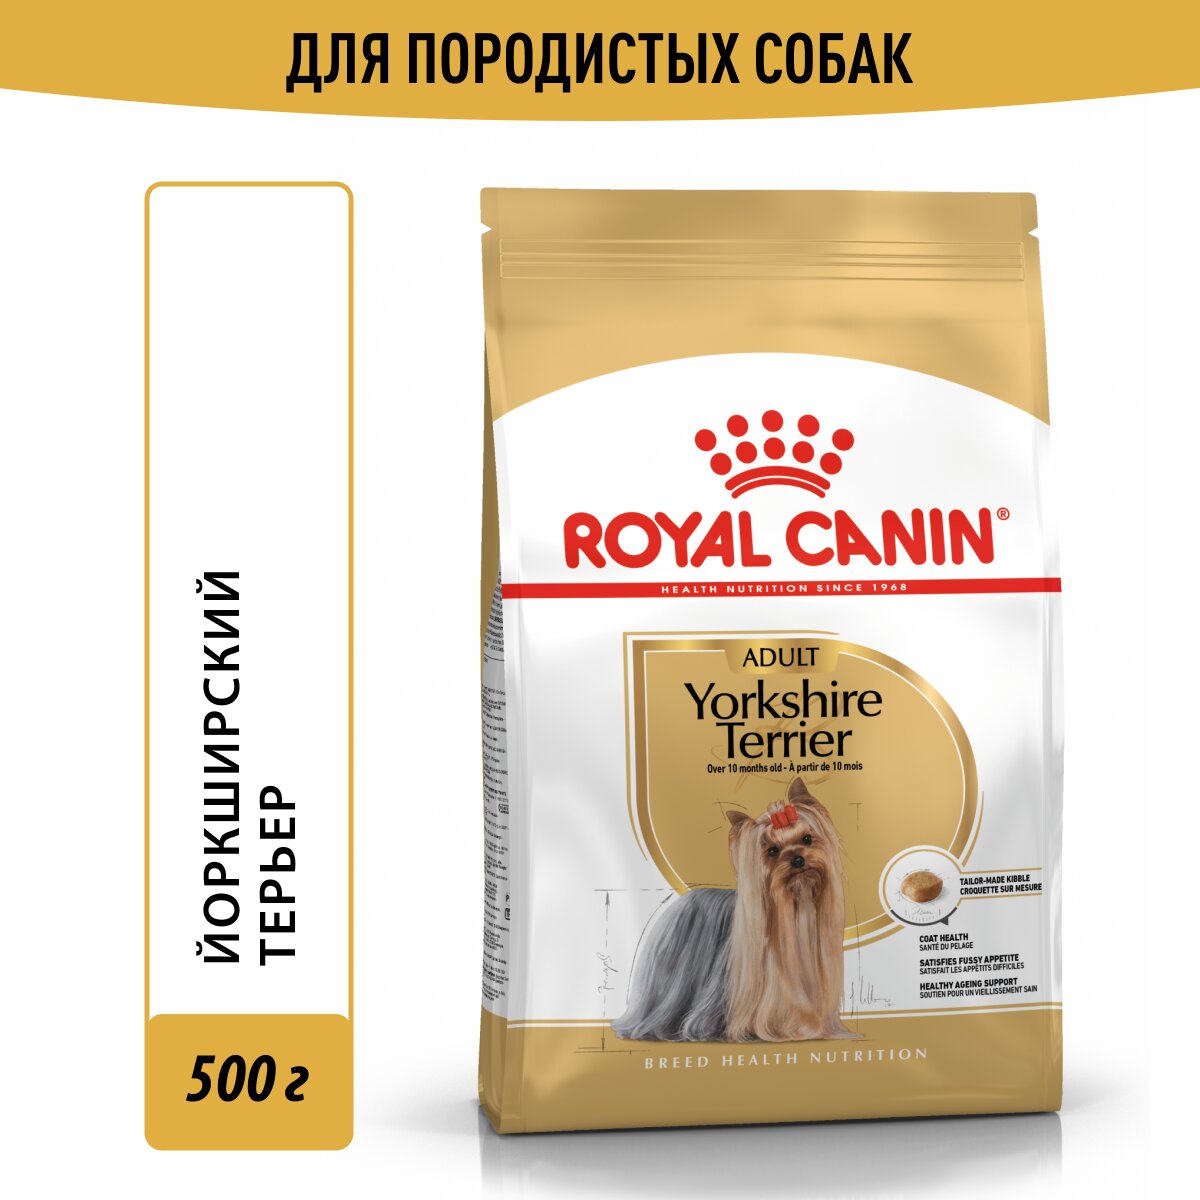 Сухой корм для собак Royal Canin Yorkshire Terrier 28 Adult породы Йоркширский терьер старше 10 месяцев